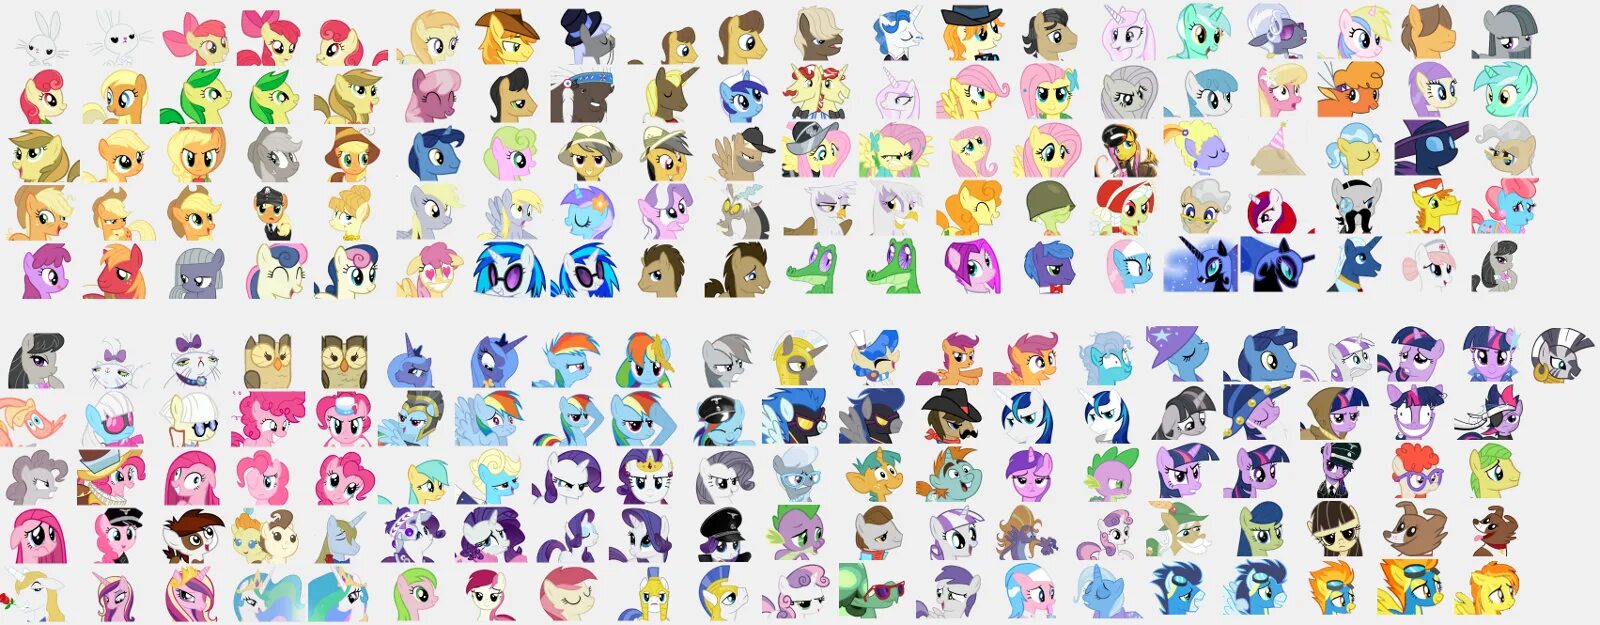 Пони имена. Имена всех персонажей my little Pony. Имена пони с картинками. Майлитлс пони имена персонажей. Имена пони pony